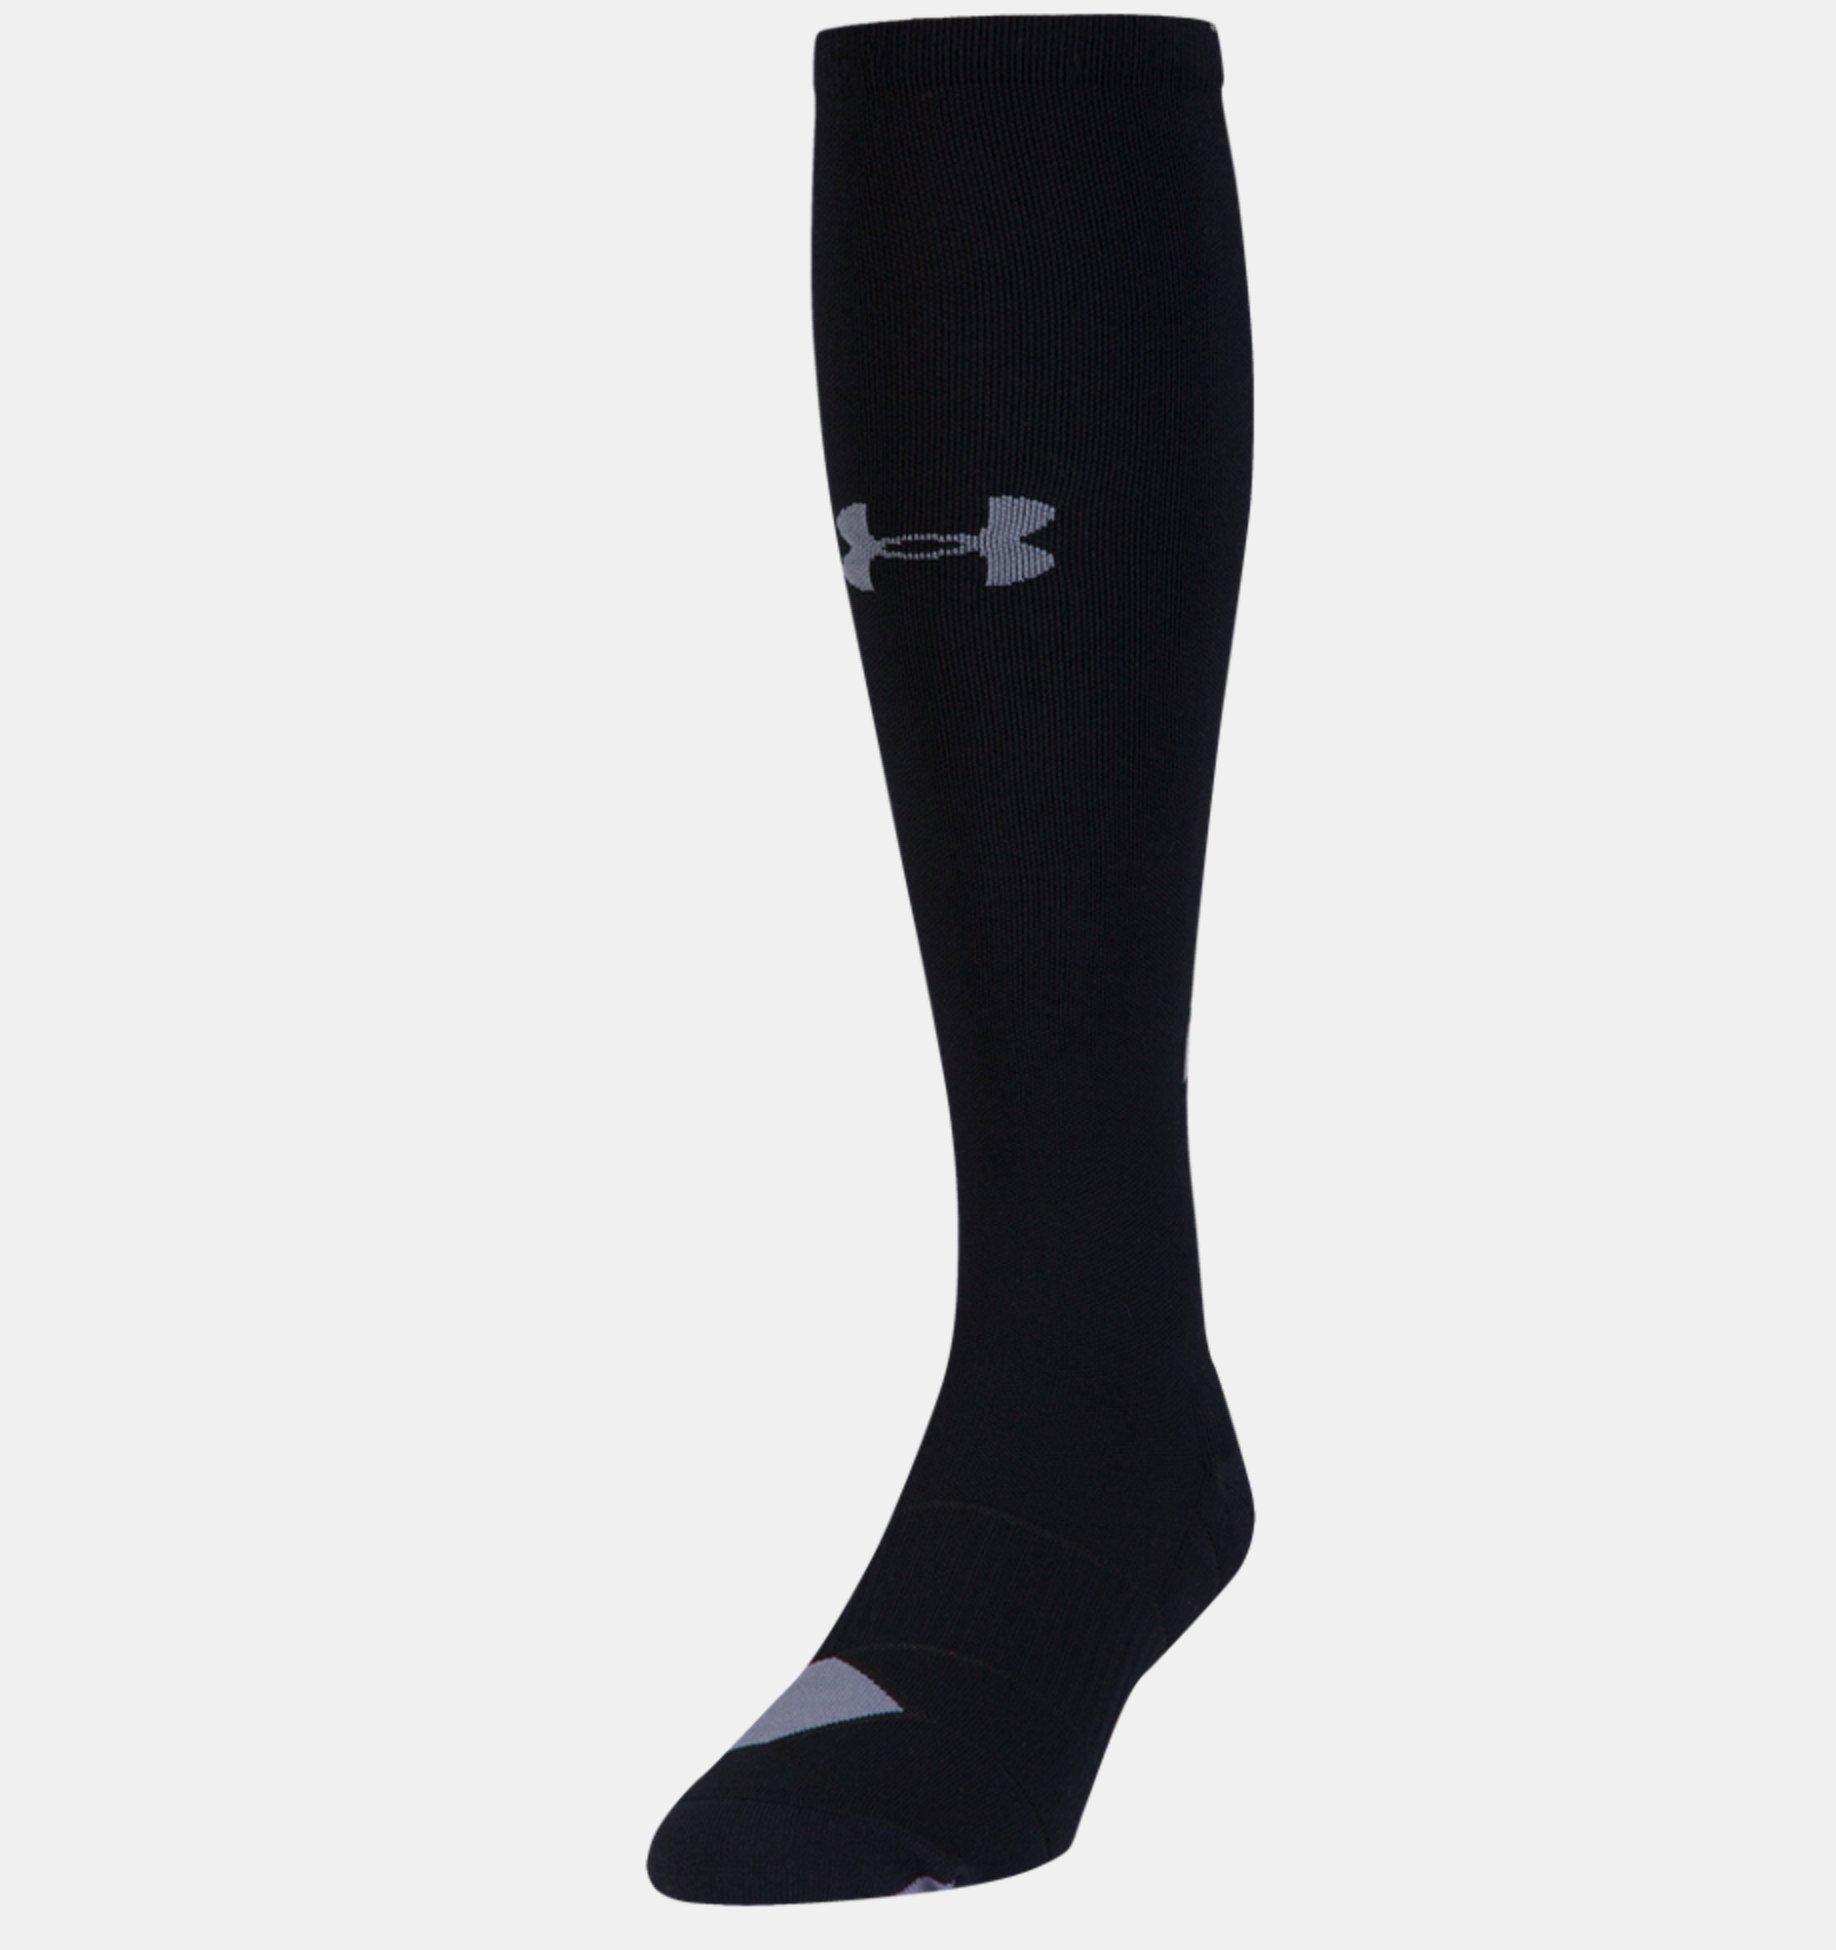 Buy Under Armour Reflective Socks Black